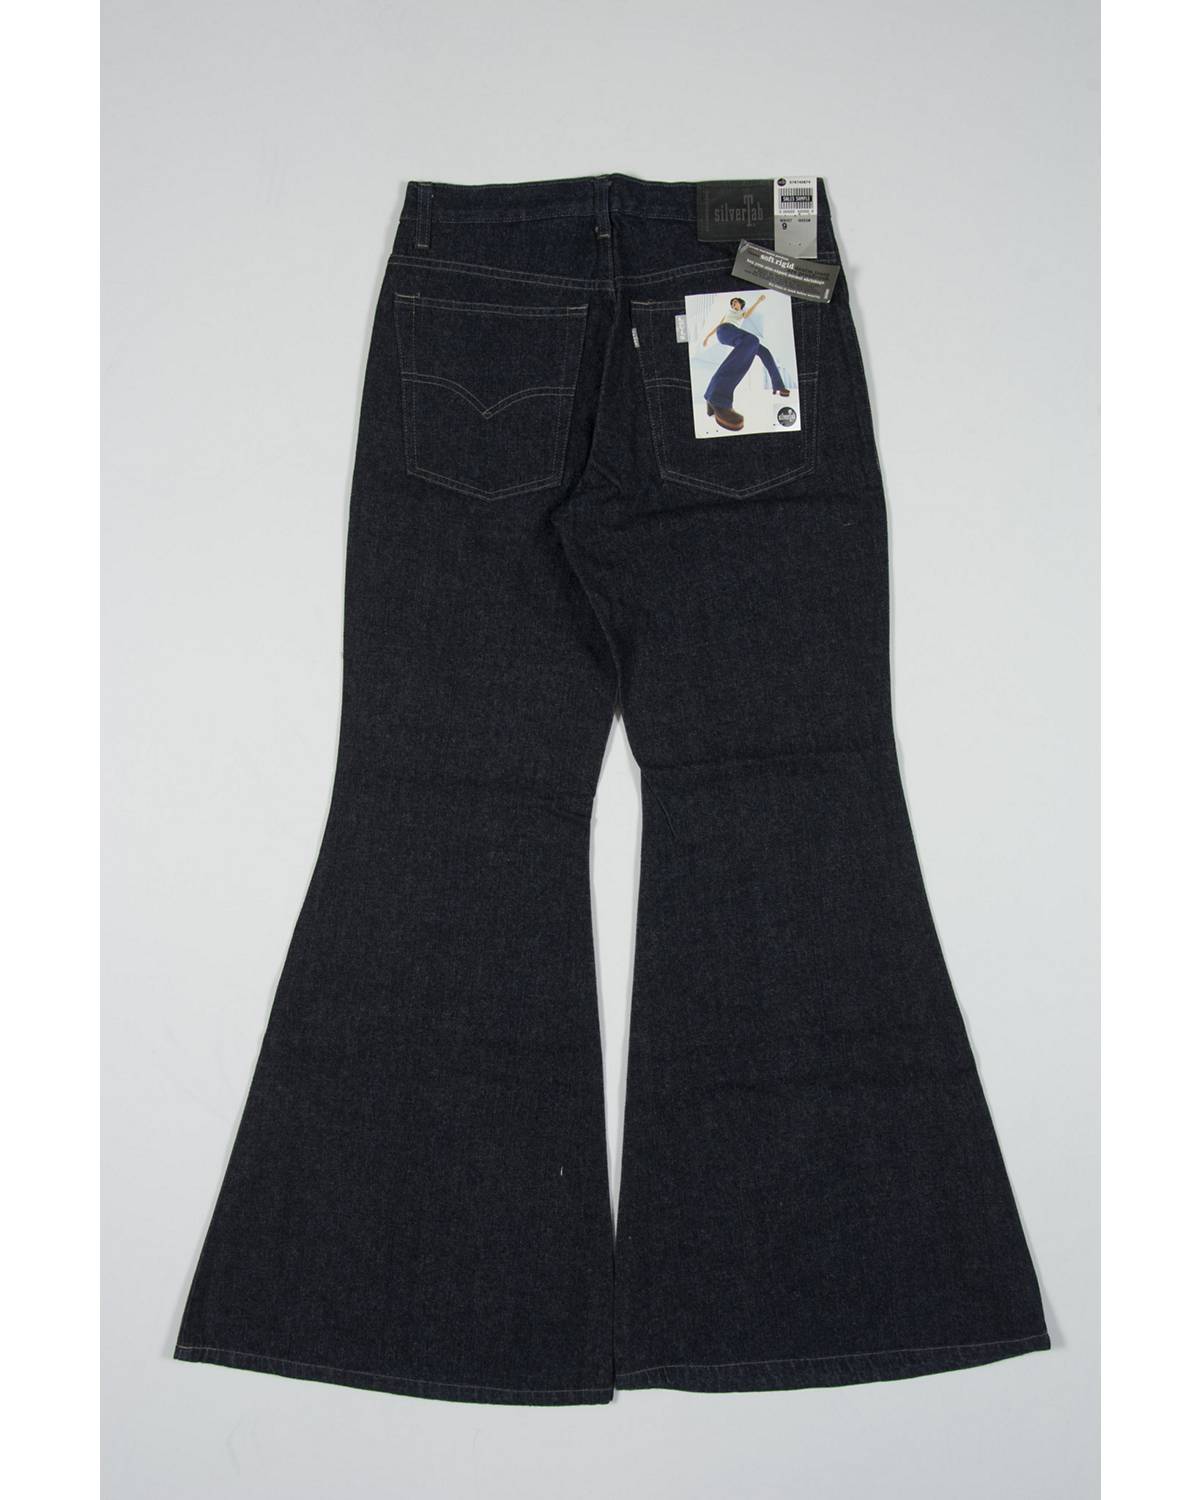 Levis 212 Heavy 14 Oz. Denim 70s Vintage Big Bell Bottom Jeans